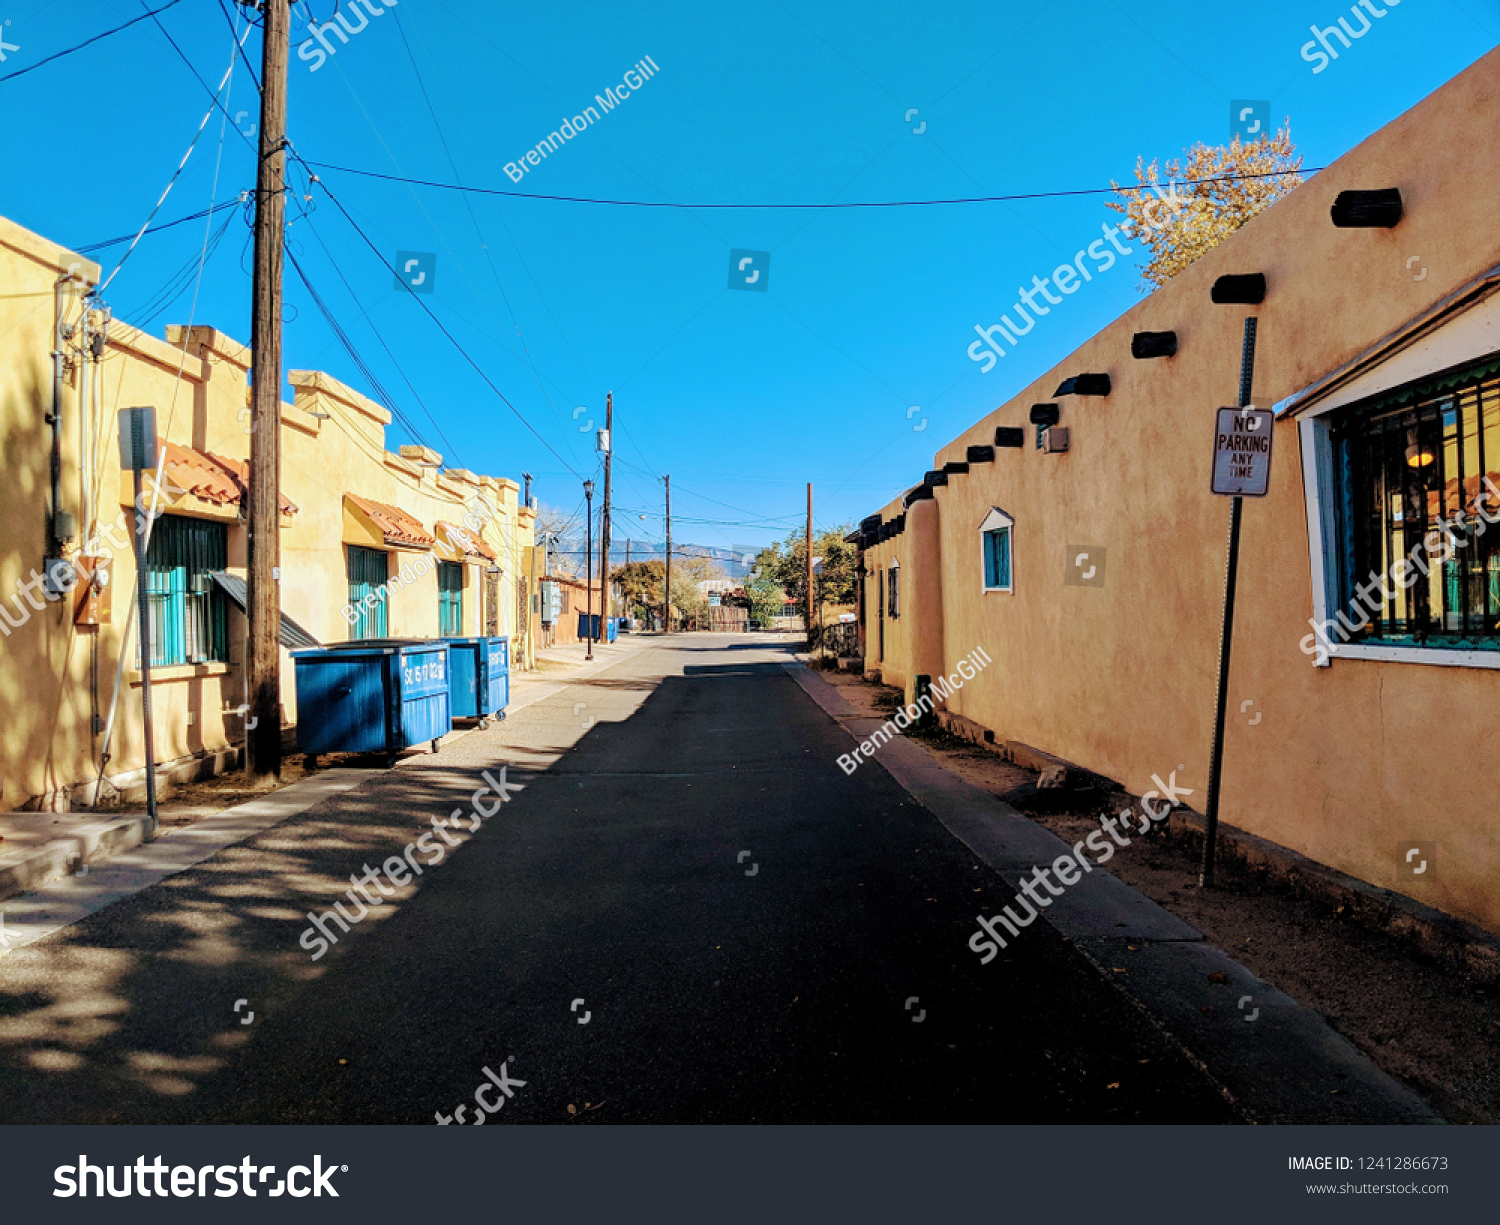 Old Town Albuquerque Nm Built 1700s1800s Stock Photo Edit Now